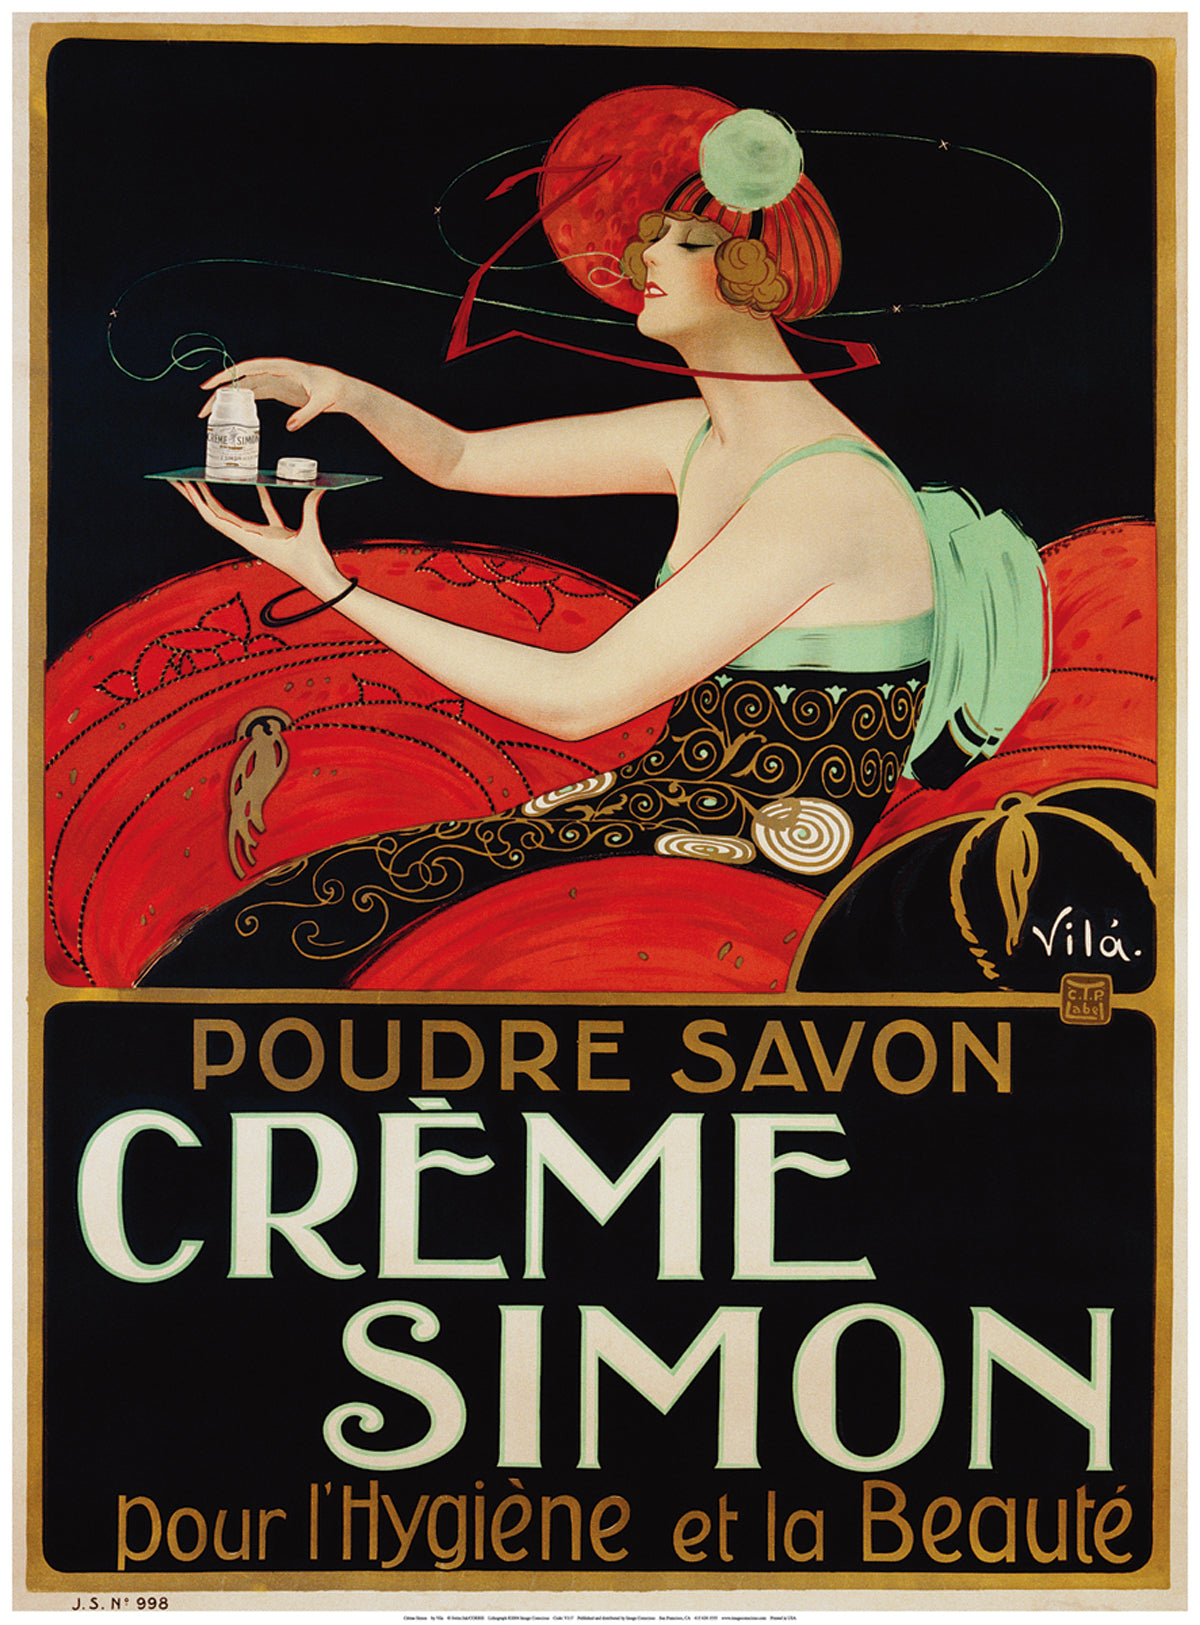 Vila - Crème Simon